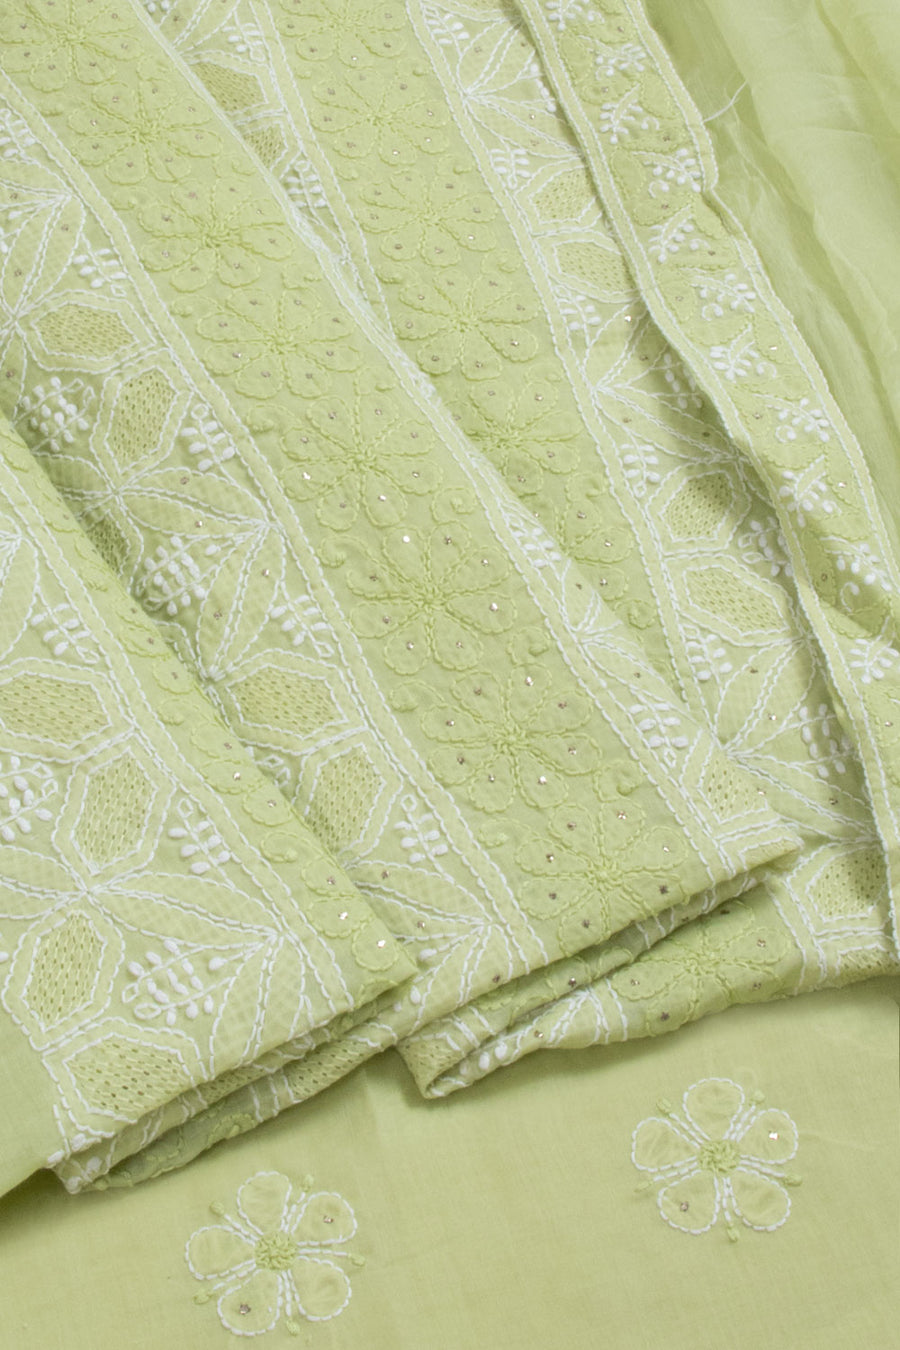 Hand Embroidered Chikankari Cotton 3-Piece Salwar Suit Material with Mukaish Work and Chiffon Crochet Border Dupatta